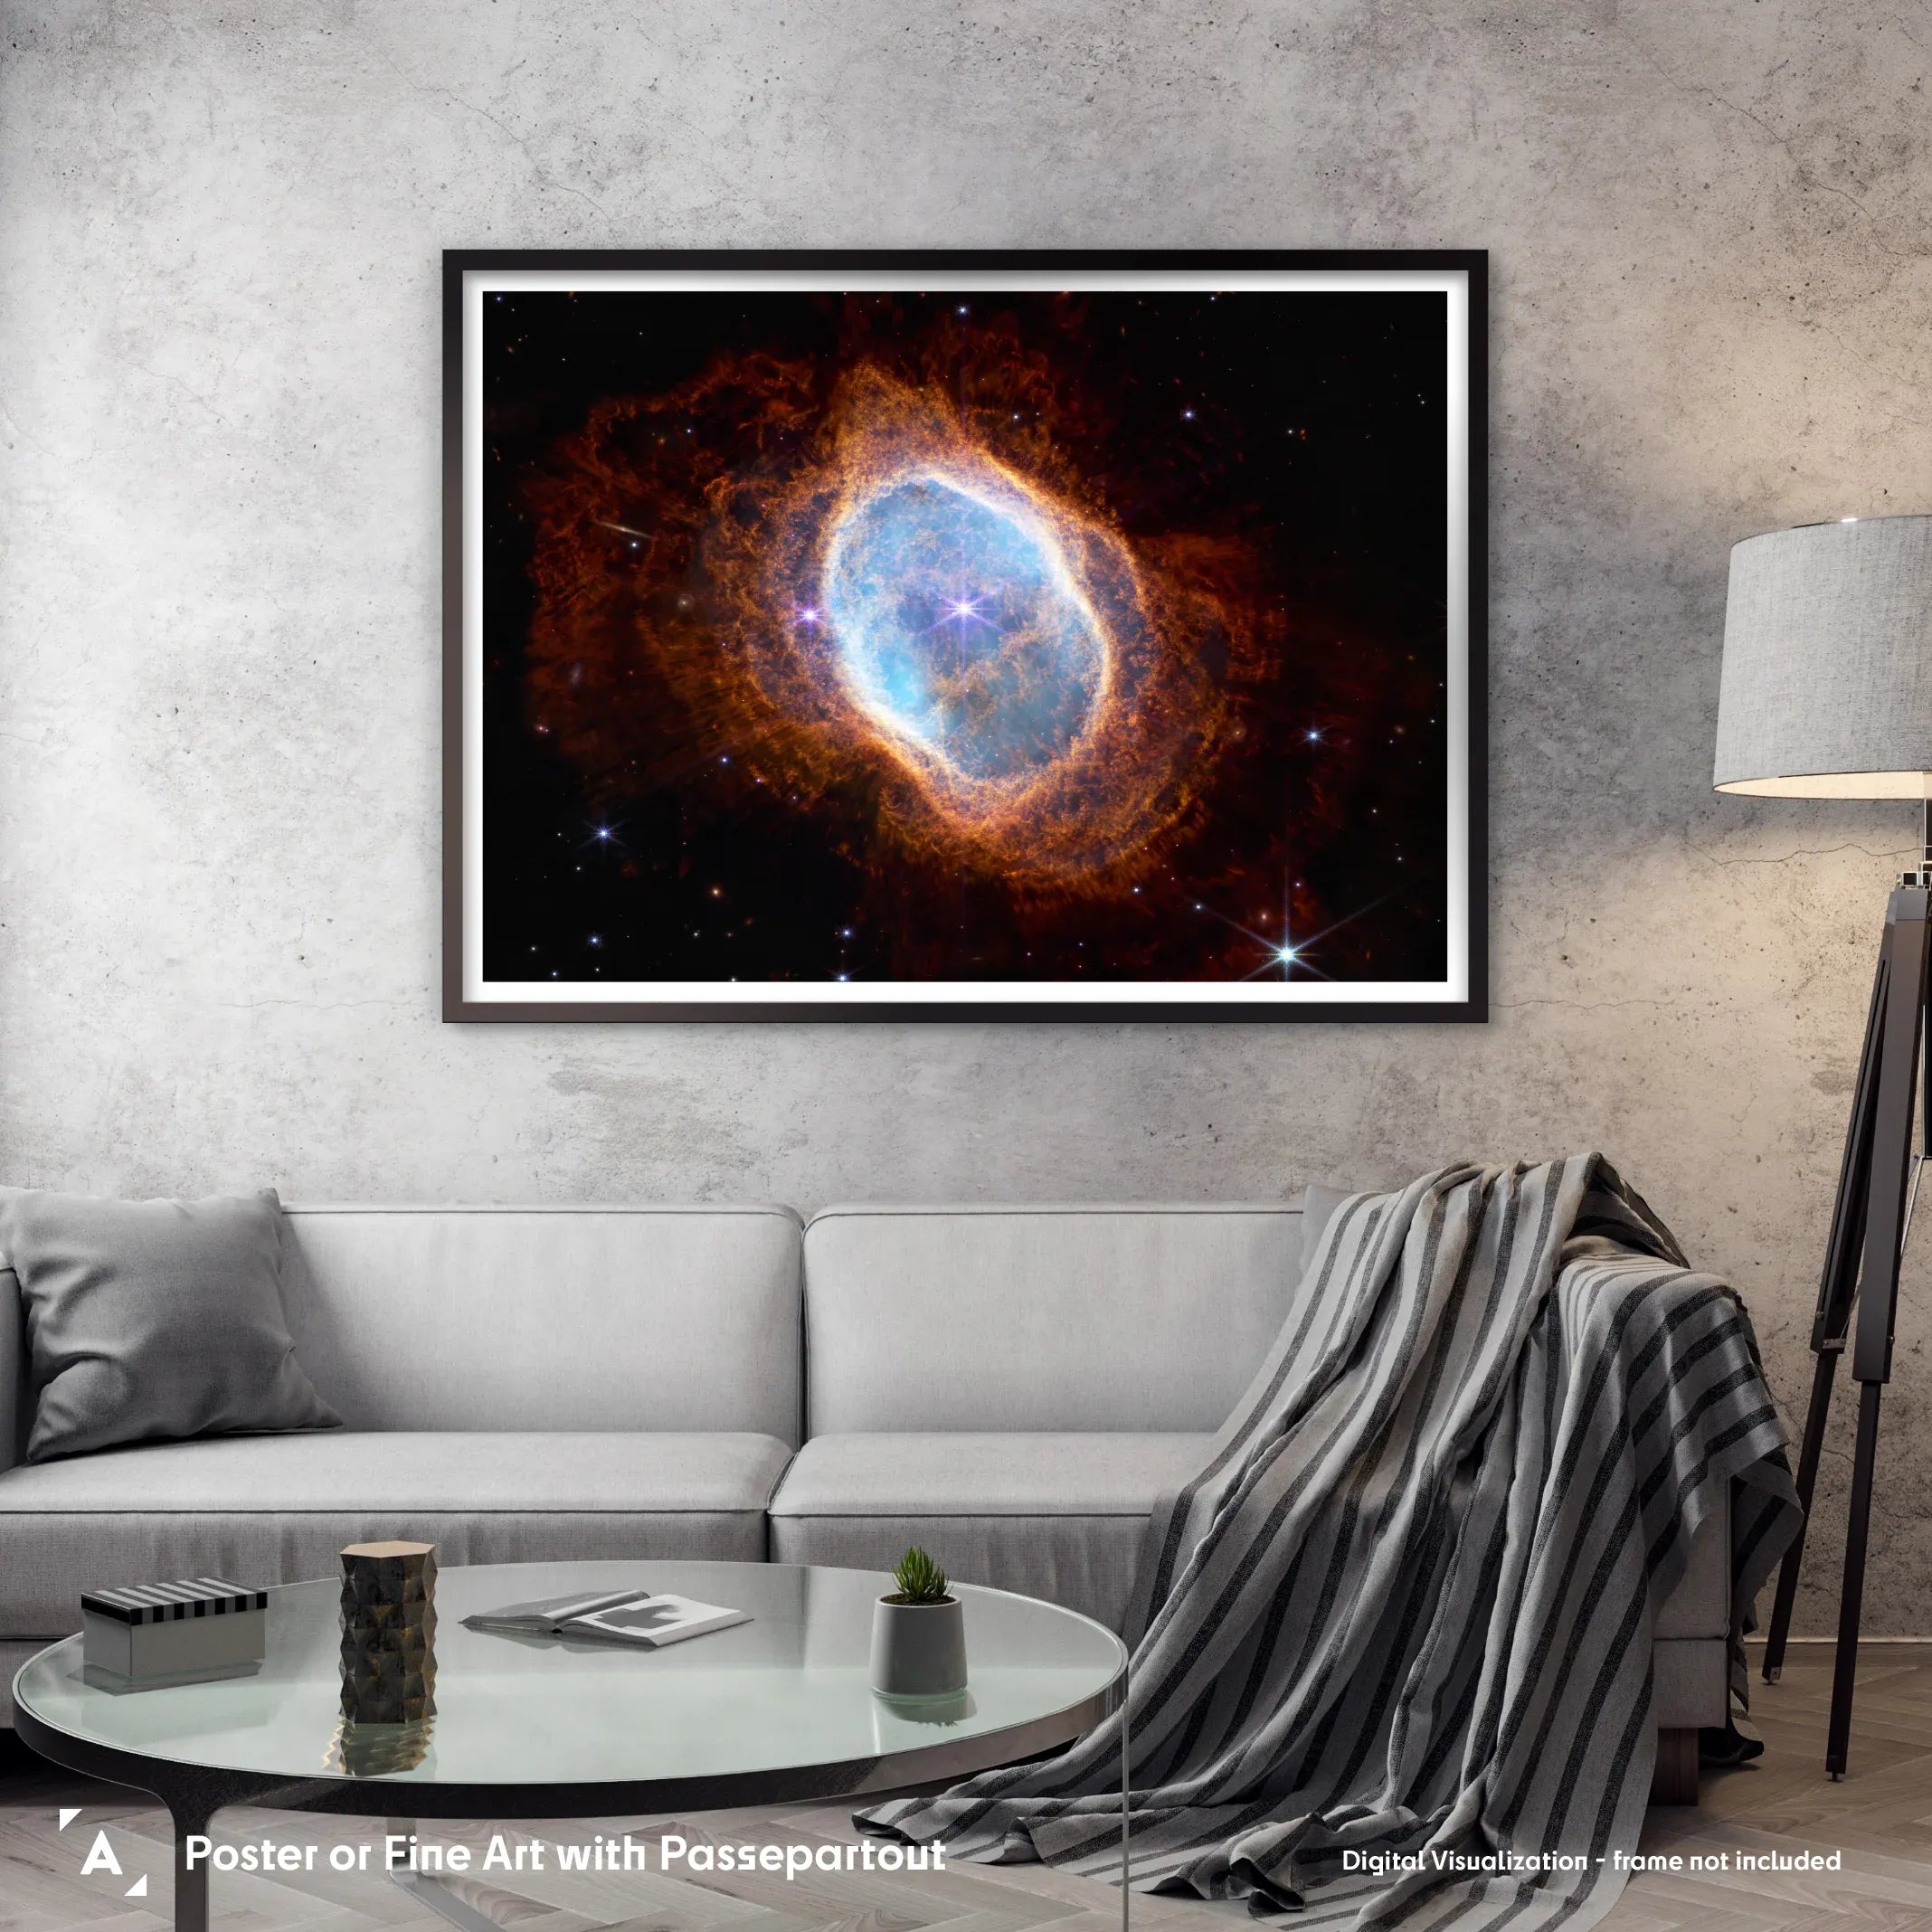 Astro Bob: Webb reveals Ring Nebula's beauty, terror - Duluth News Tribune  | News, weather, and sports from Duluth, Minnesota